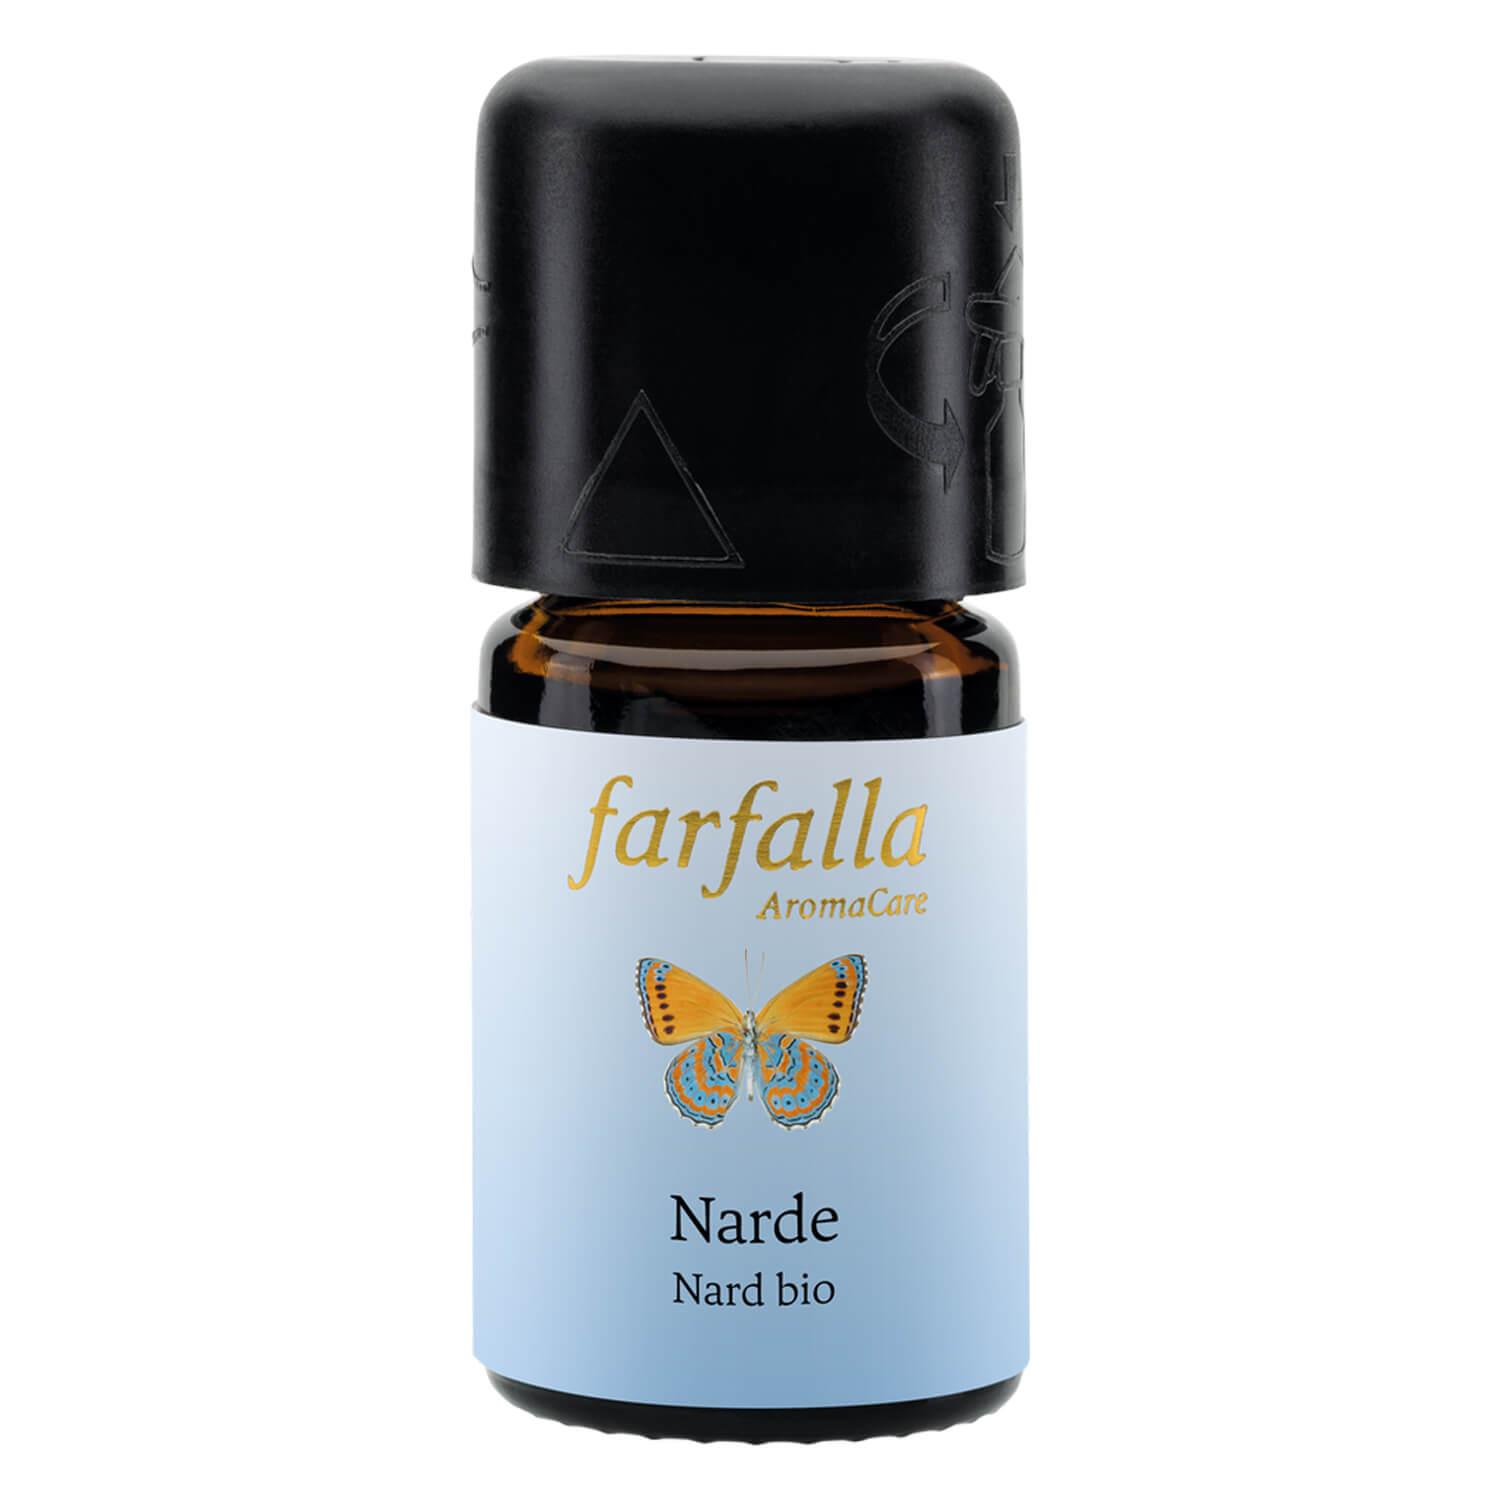 Farfalla Essential Oils - Nard bio